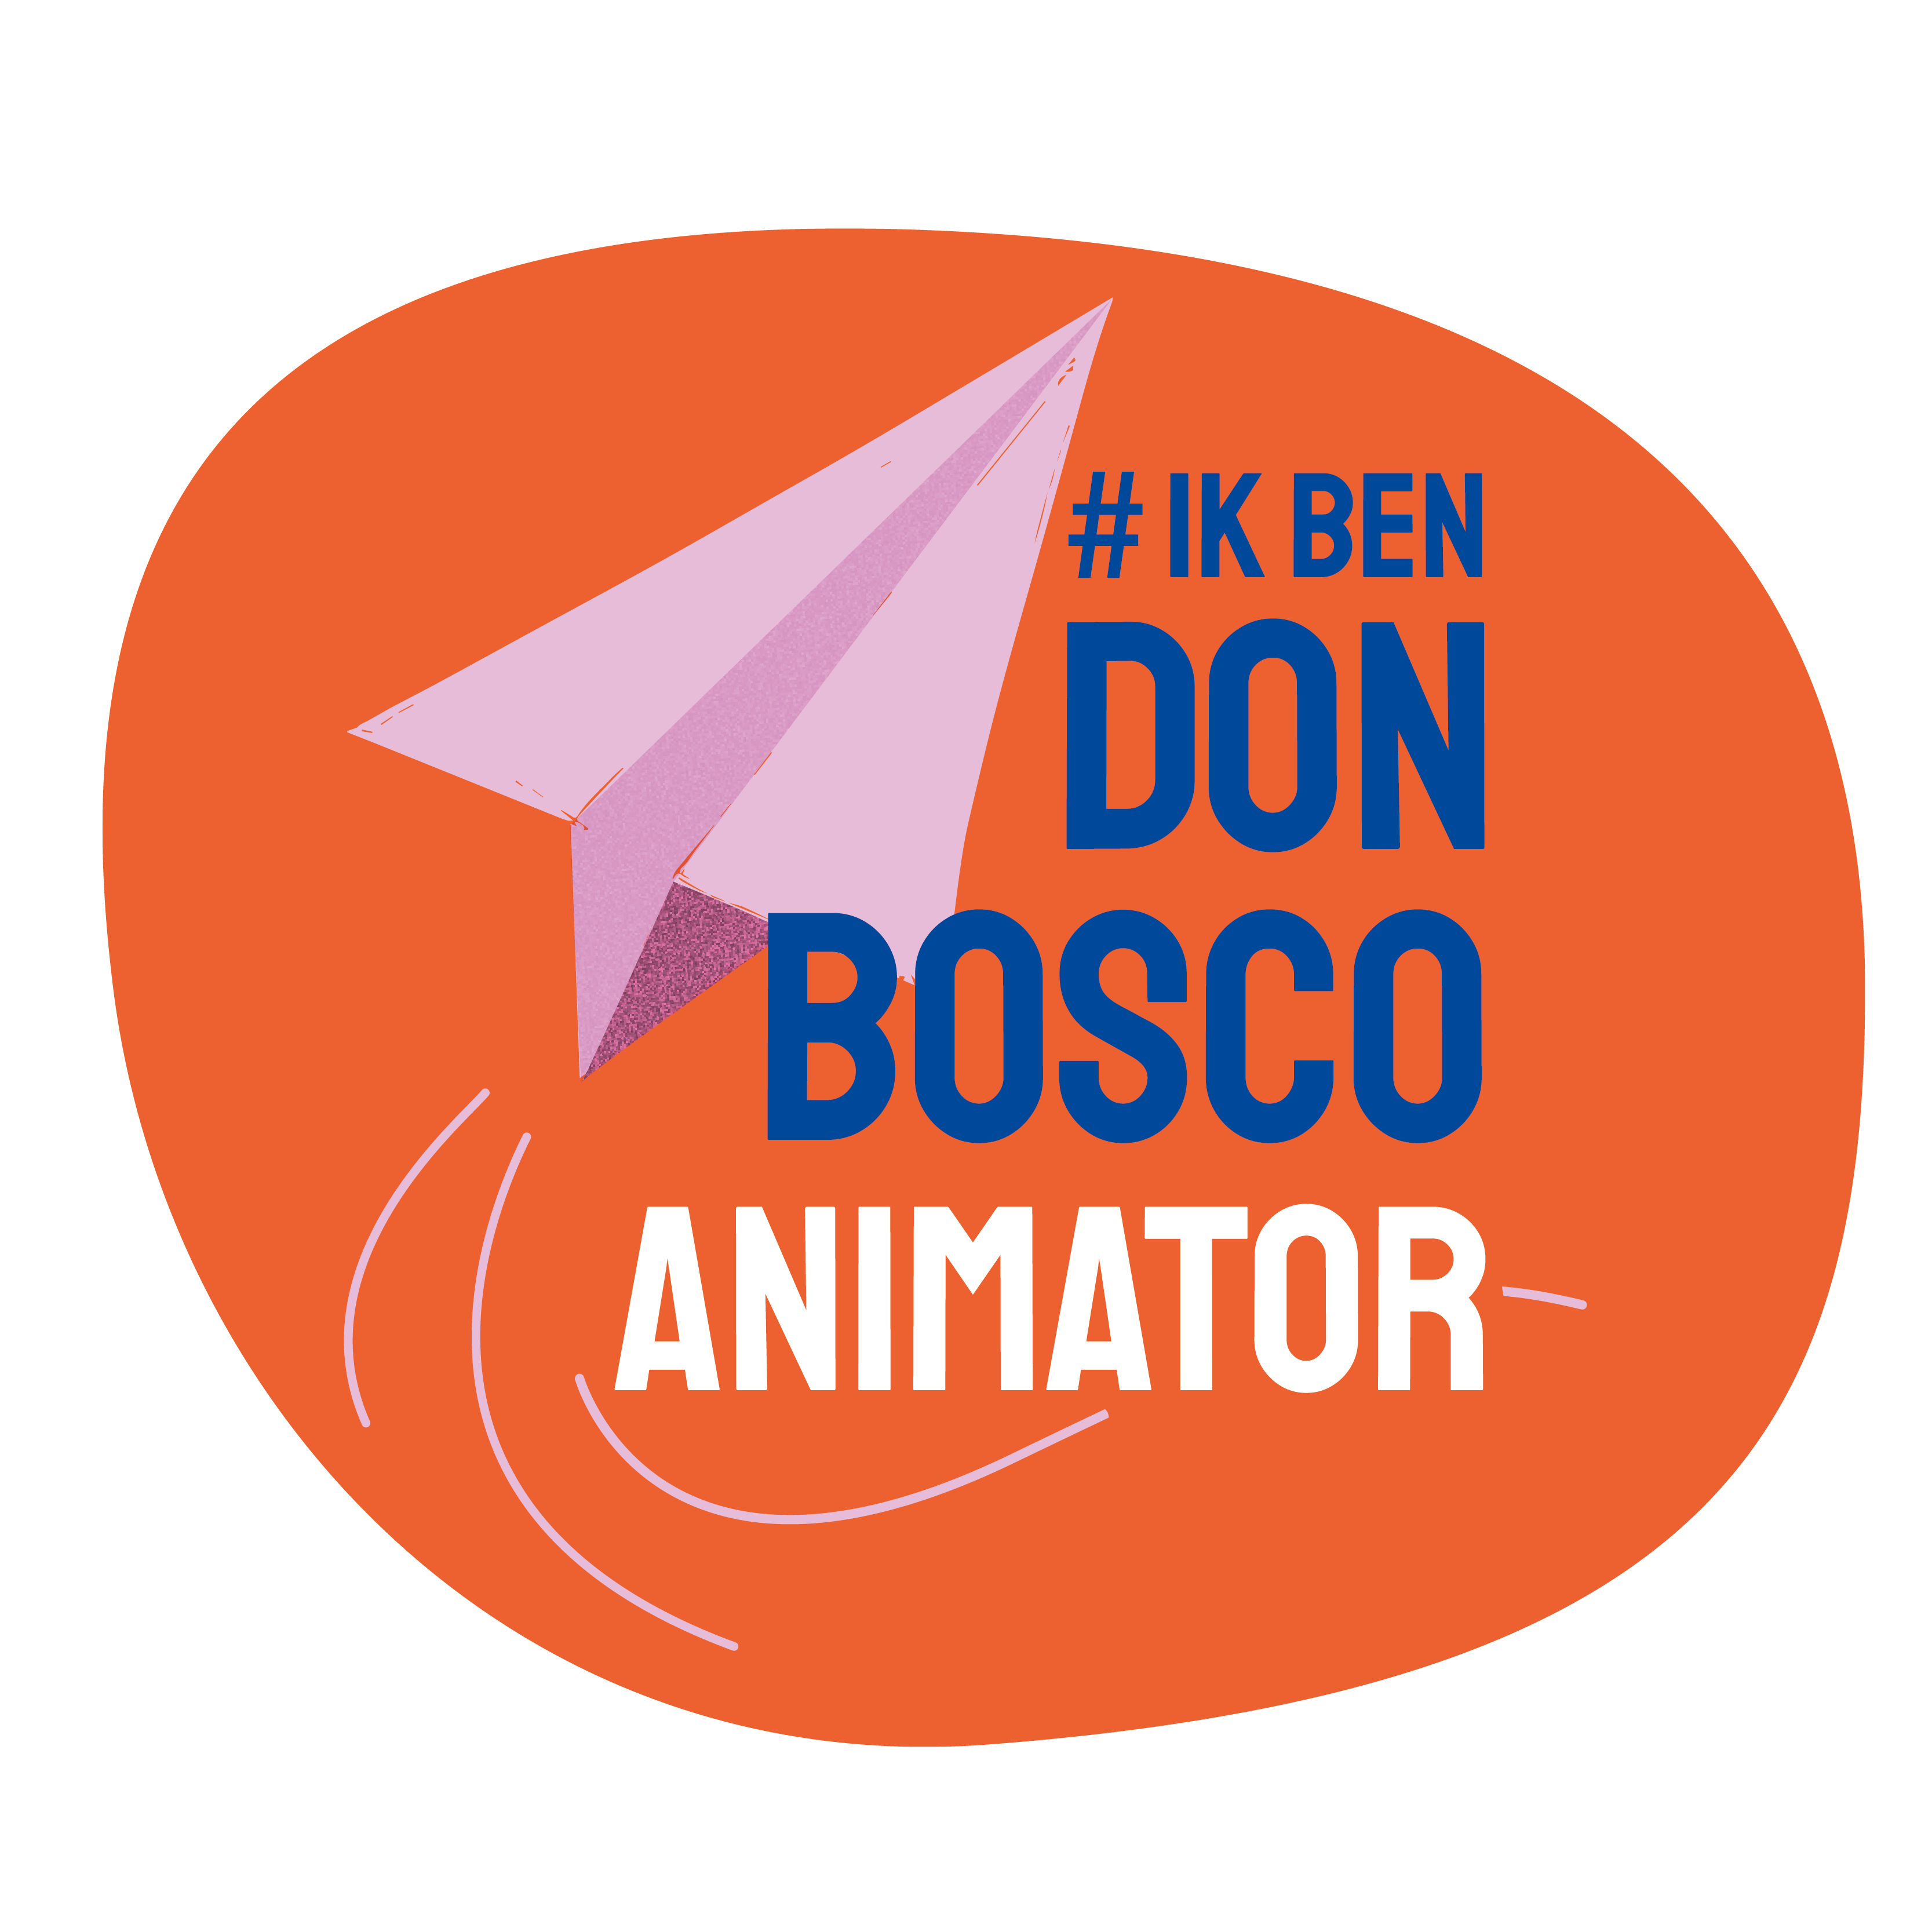 Don Bosco animator